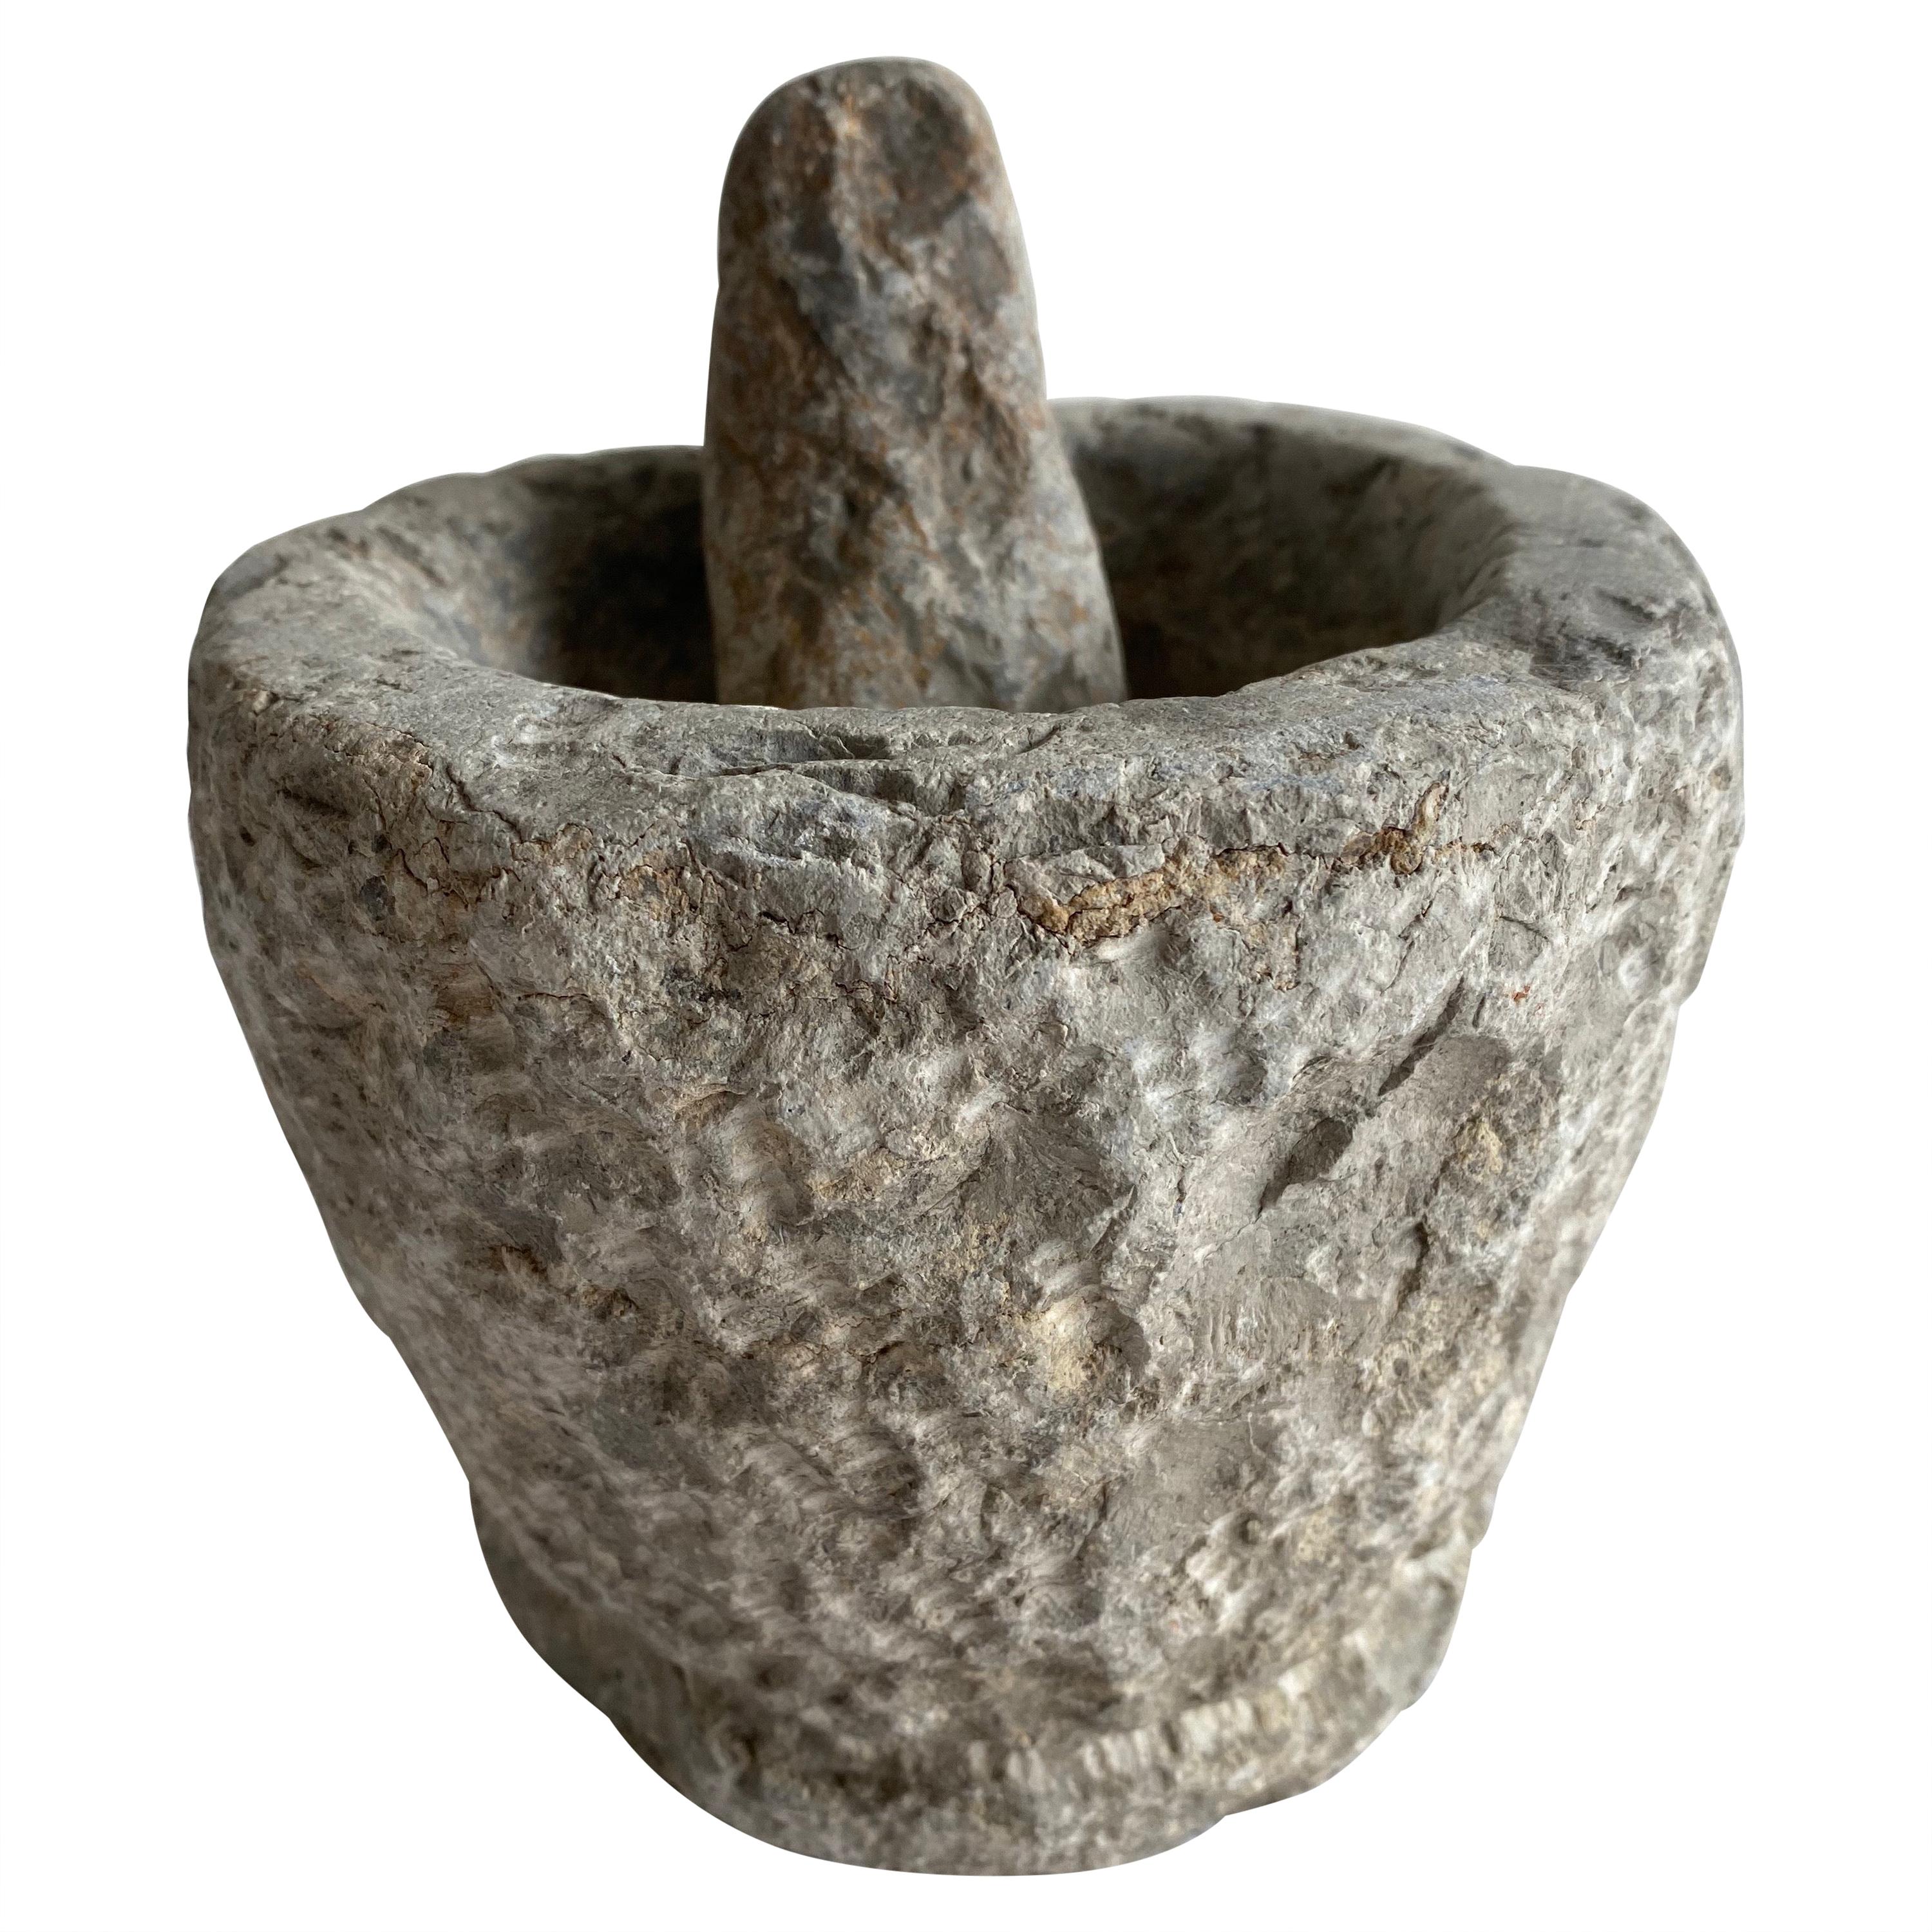 Antique Mortar and Pestle Stone Bowl Set